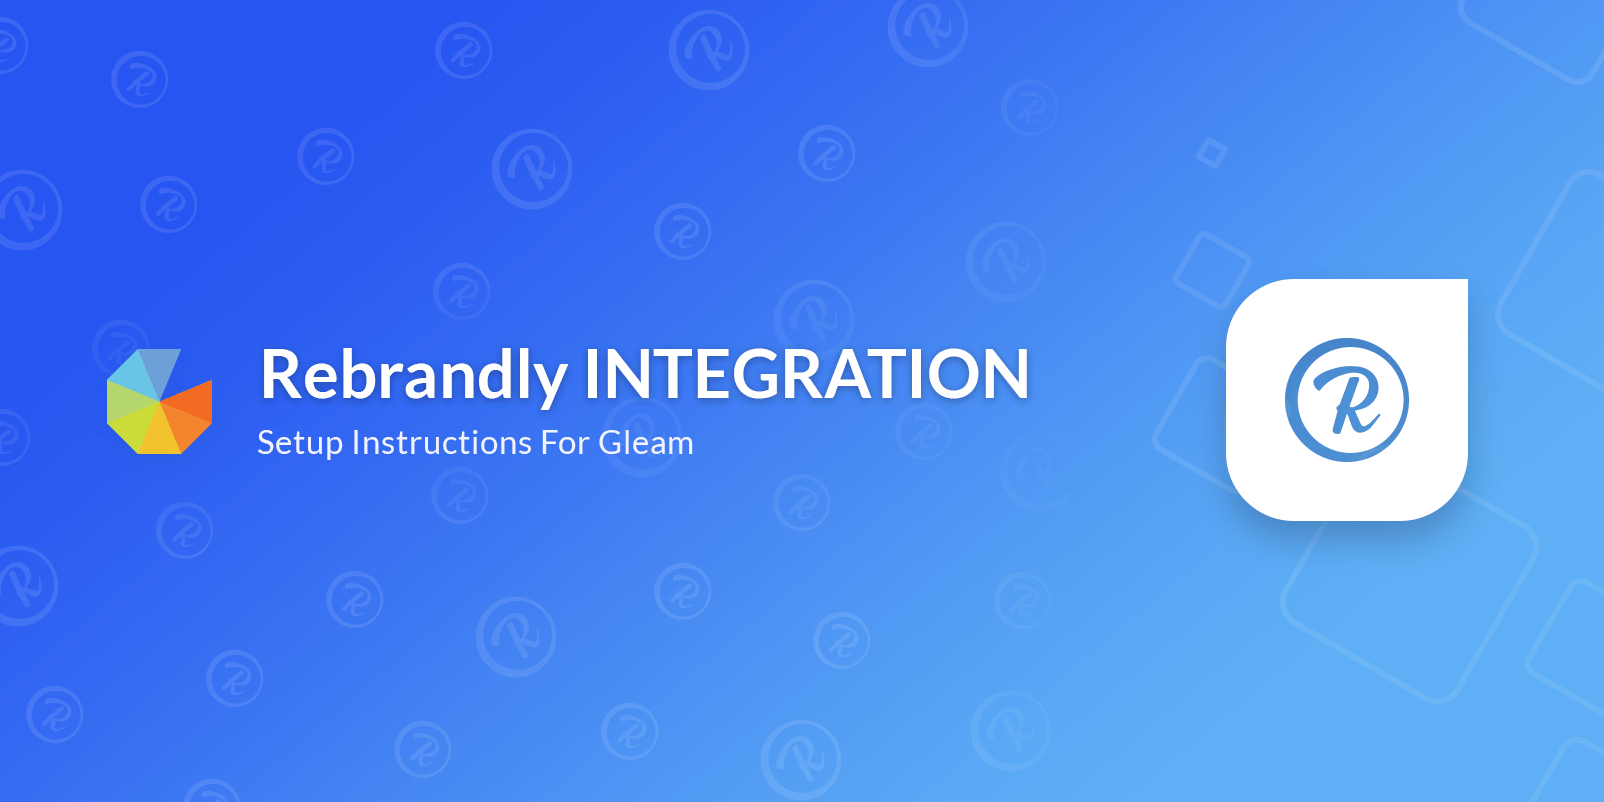 Rebrandly integration setup instructions for Gleam